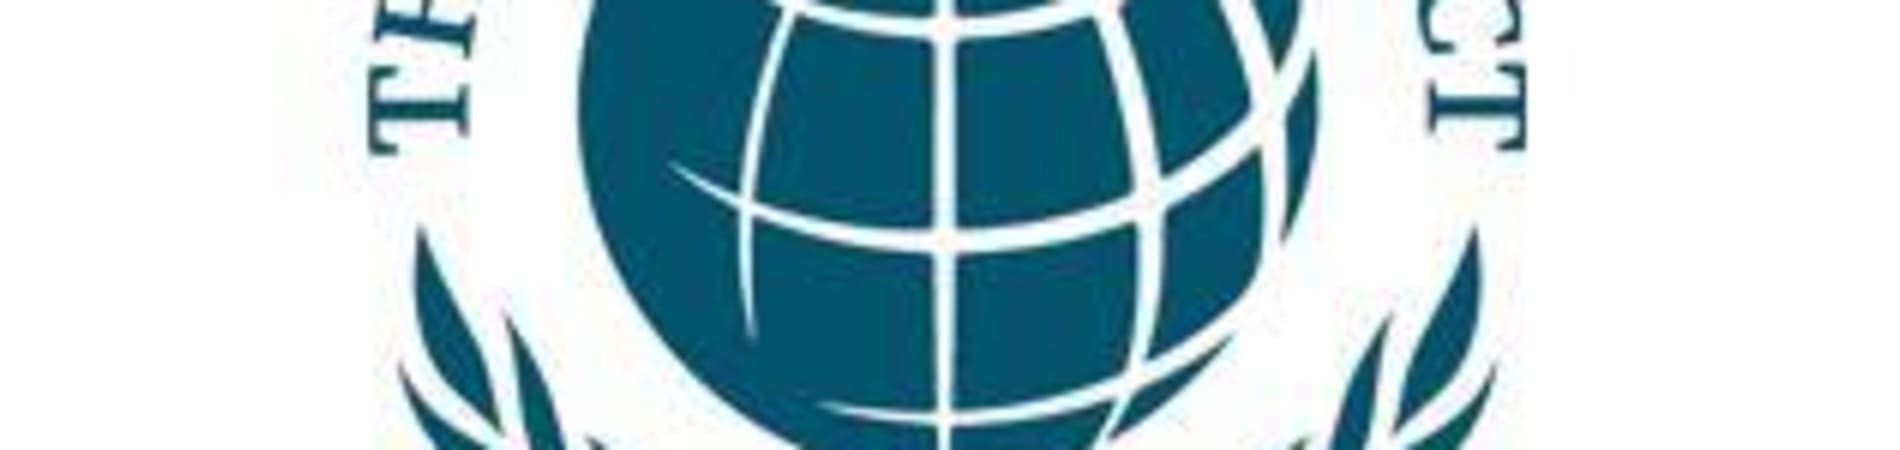 Marshalls Publish 6th United Nations Global Compact Communication on Progress Report